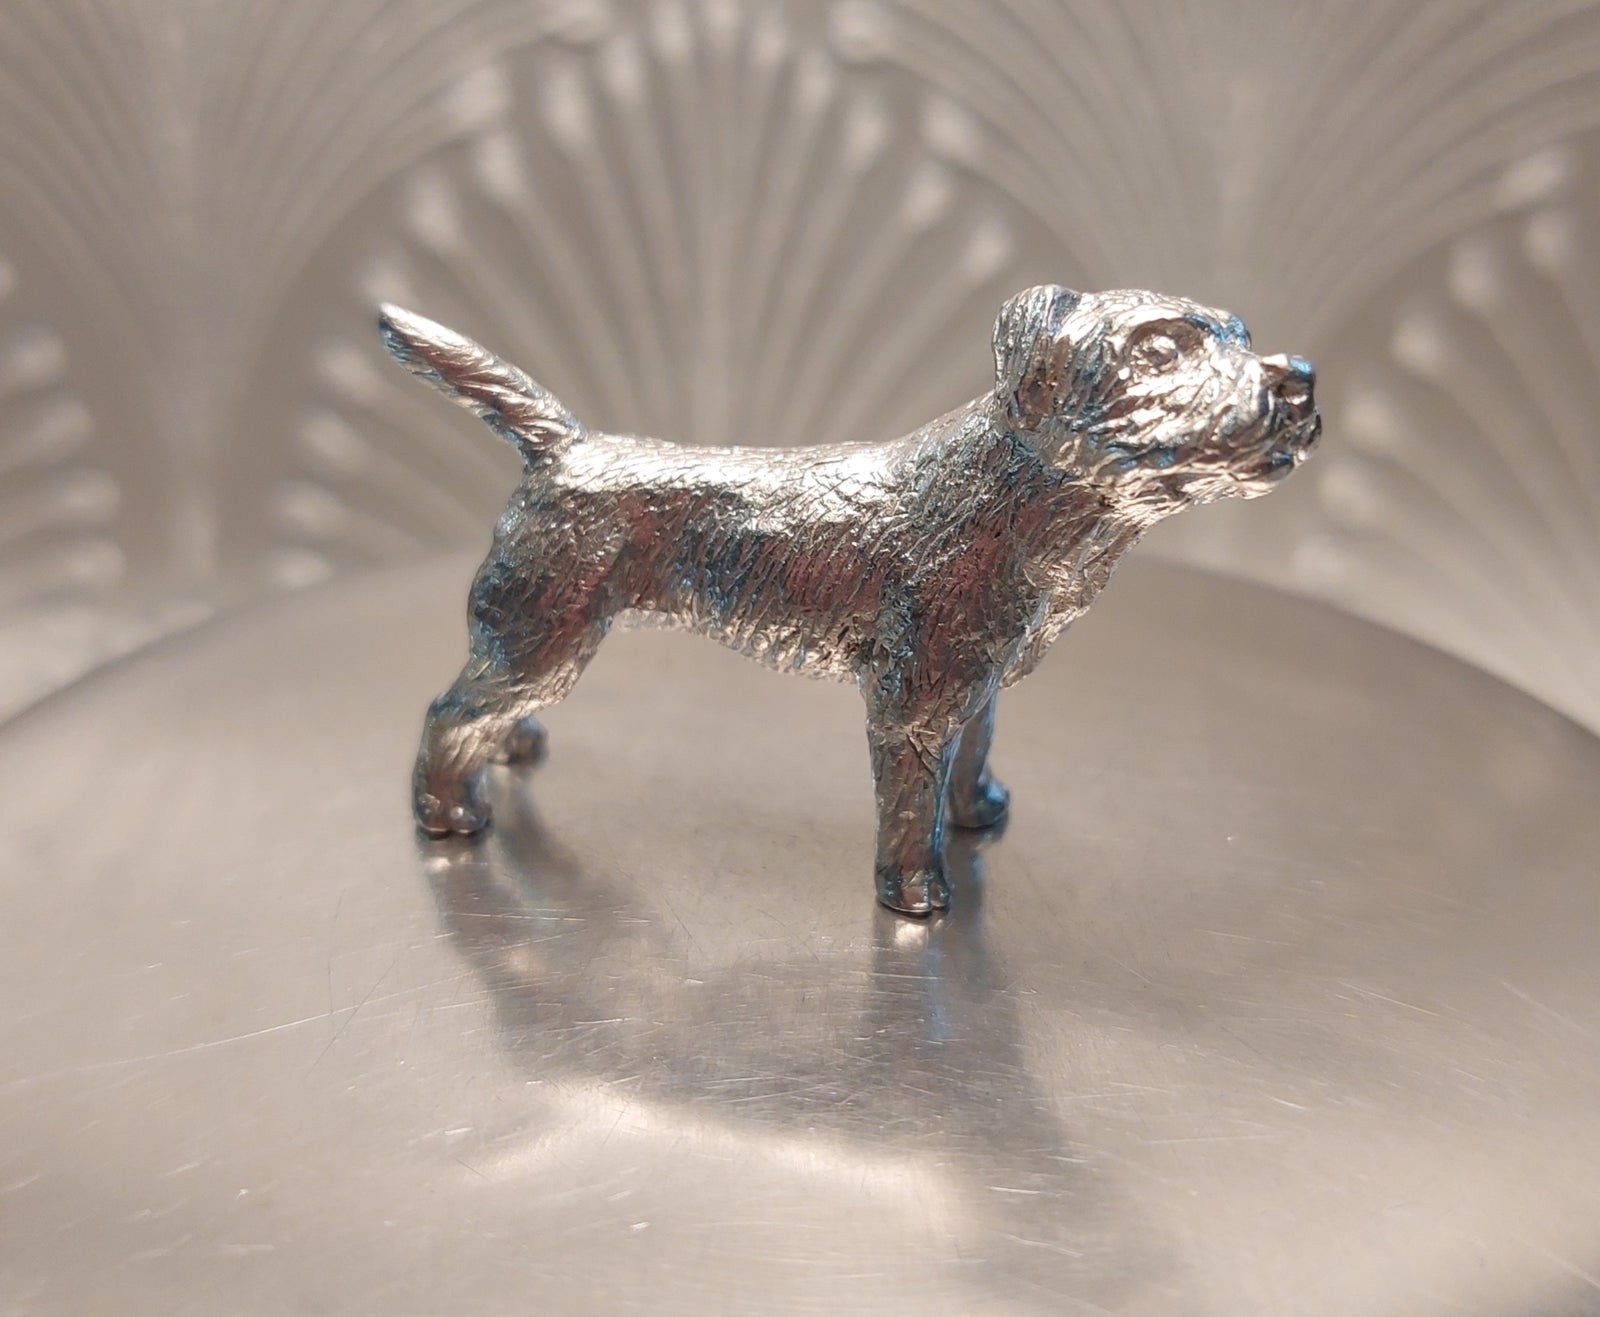 A silver westie dog